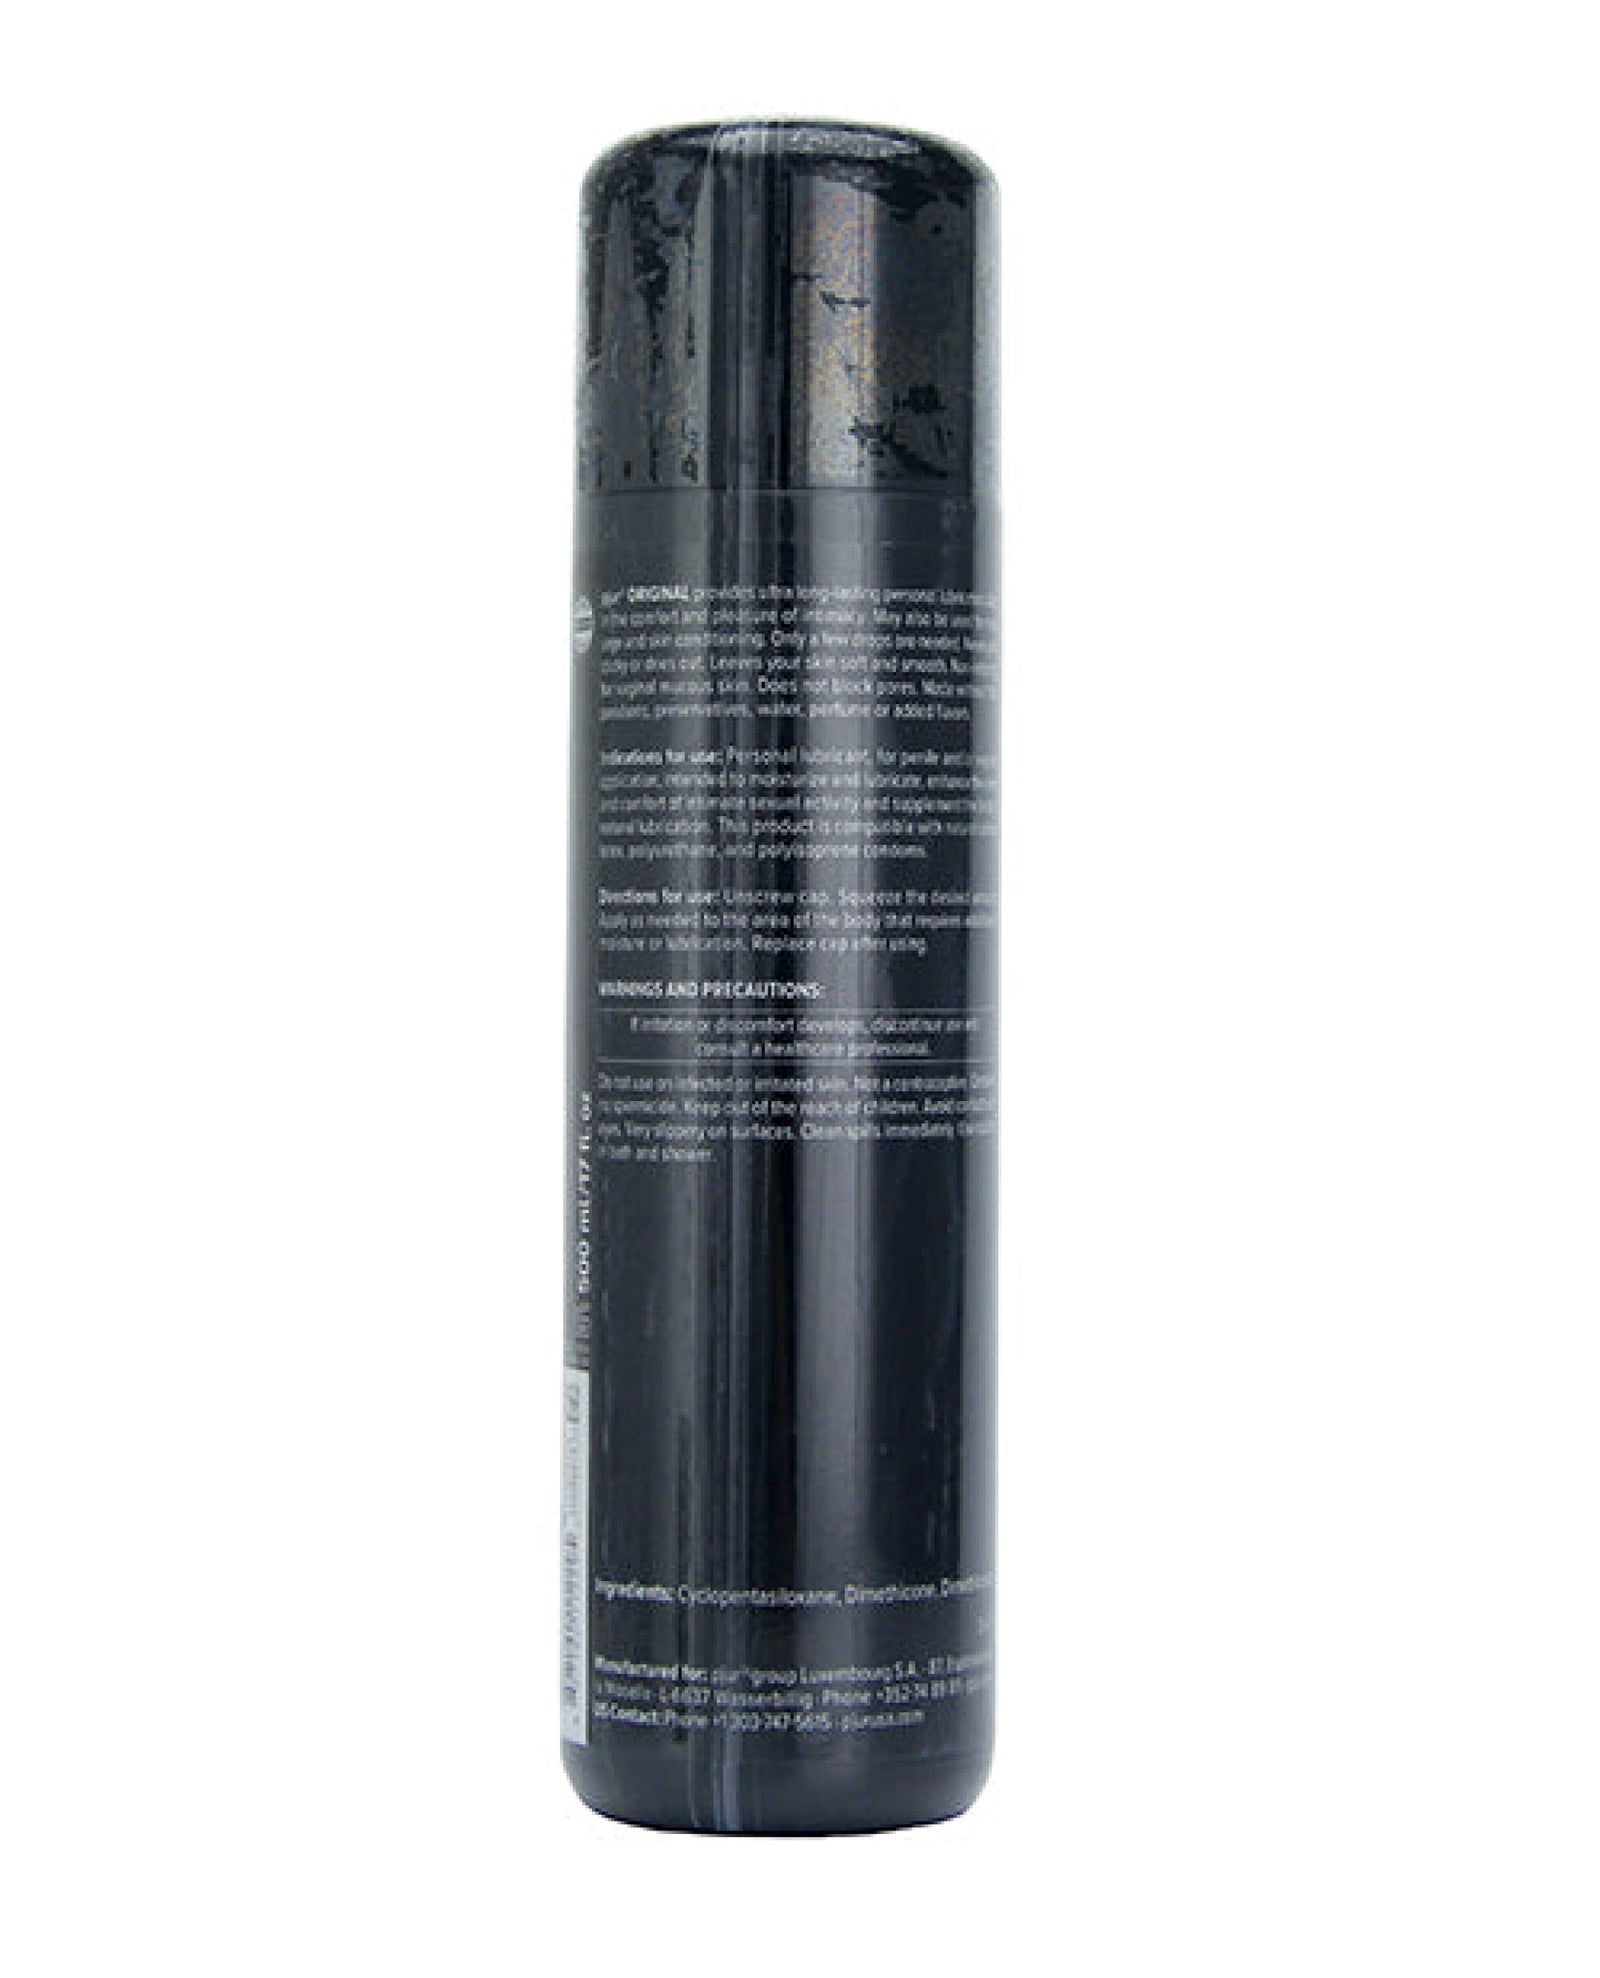 Pjur Original Silicone Personal Lubricant - 500 Ml Bottle Pjur